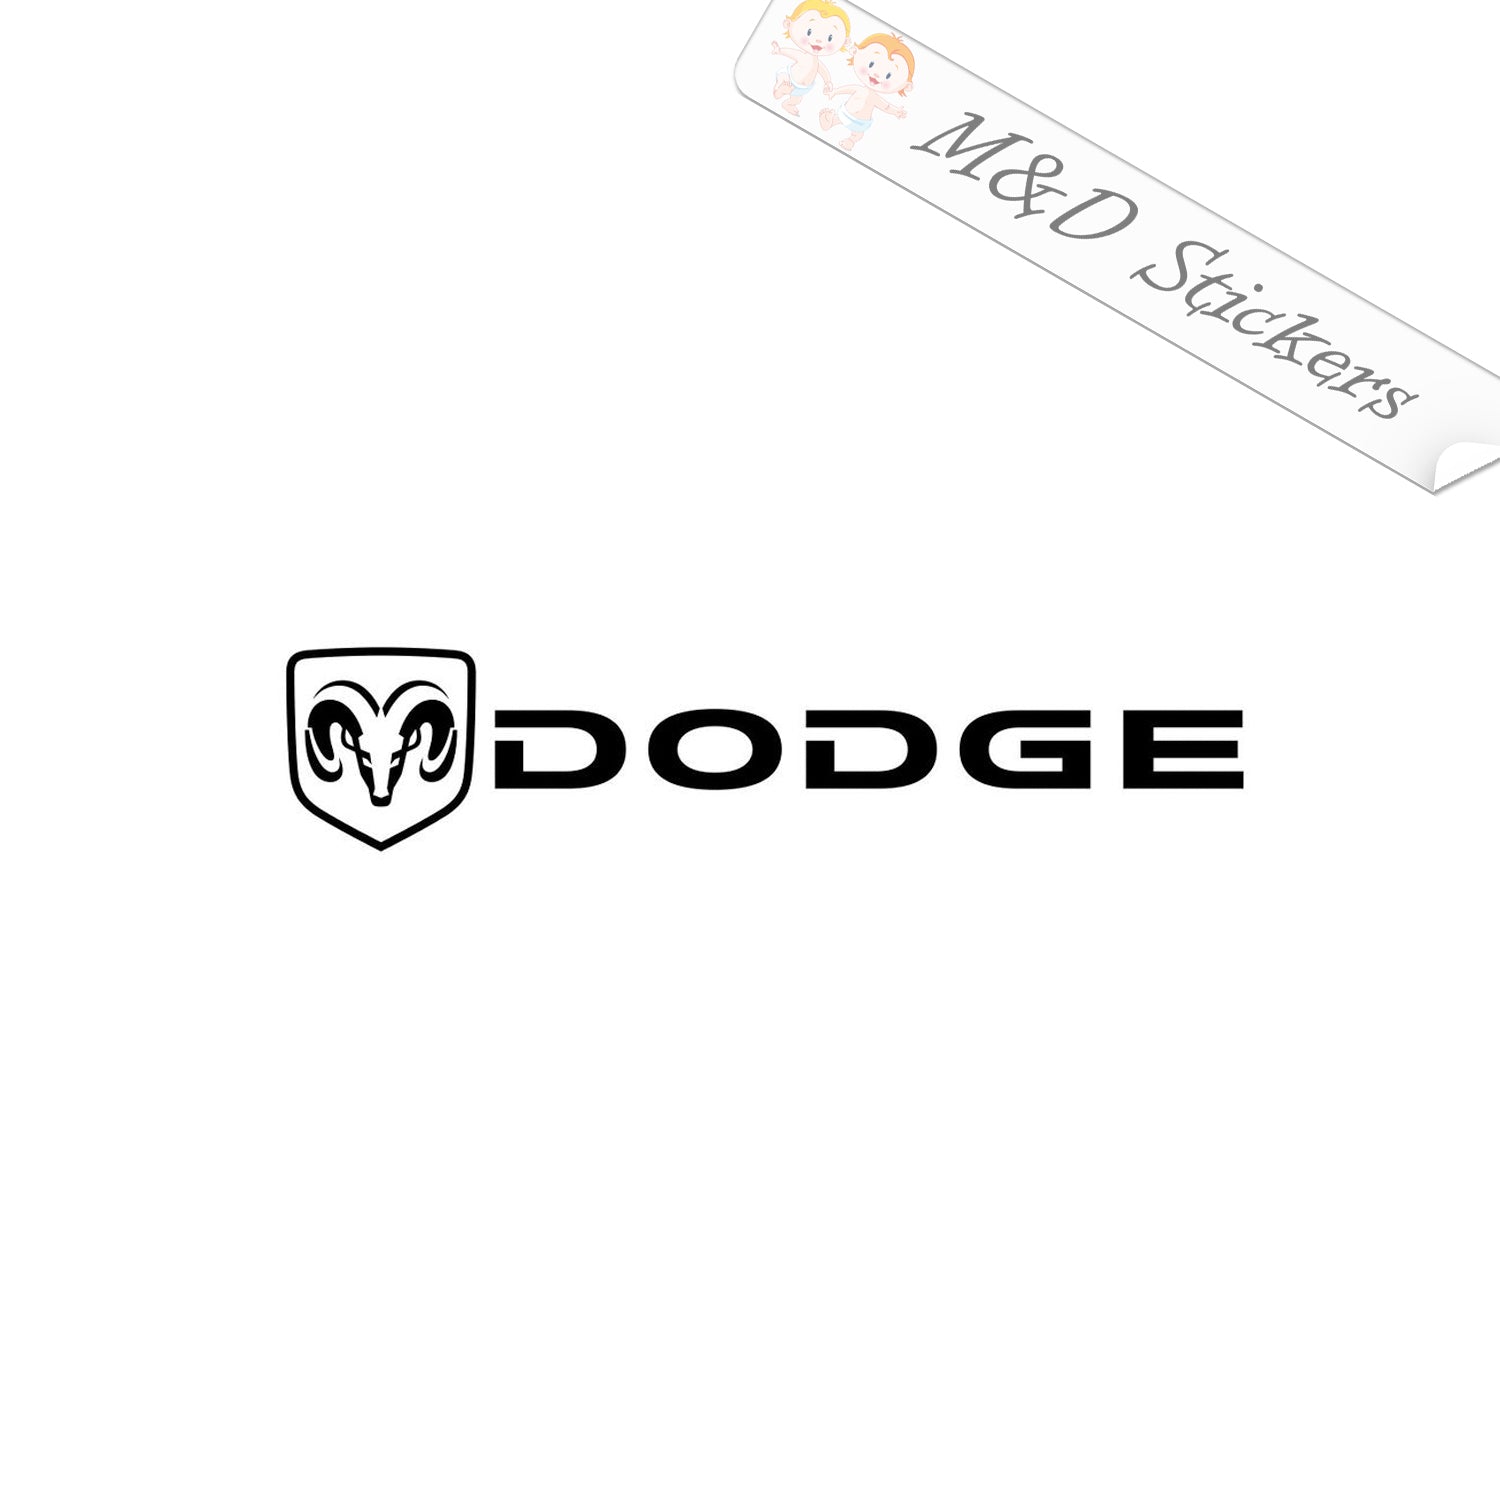 new dodge logo vector